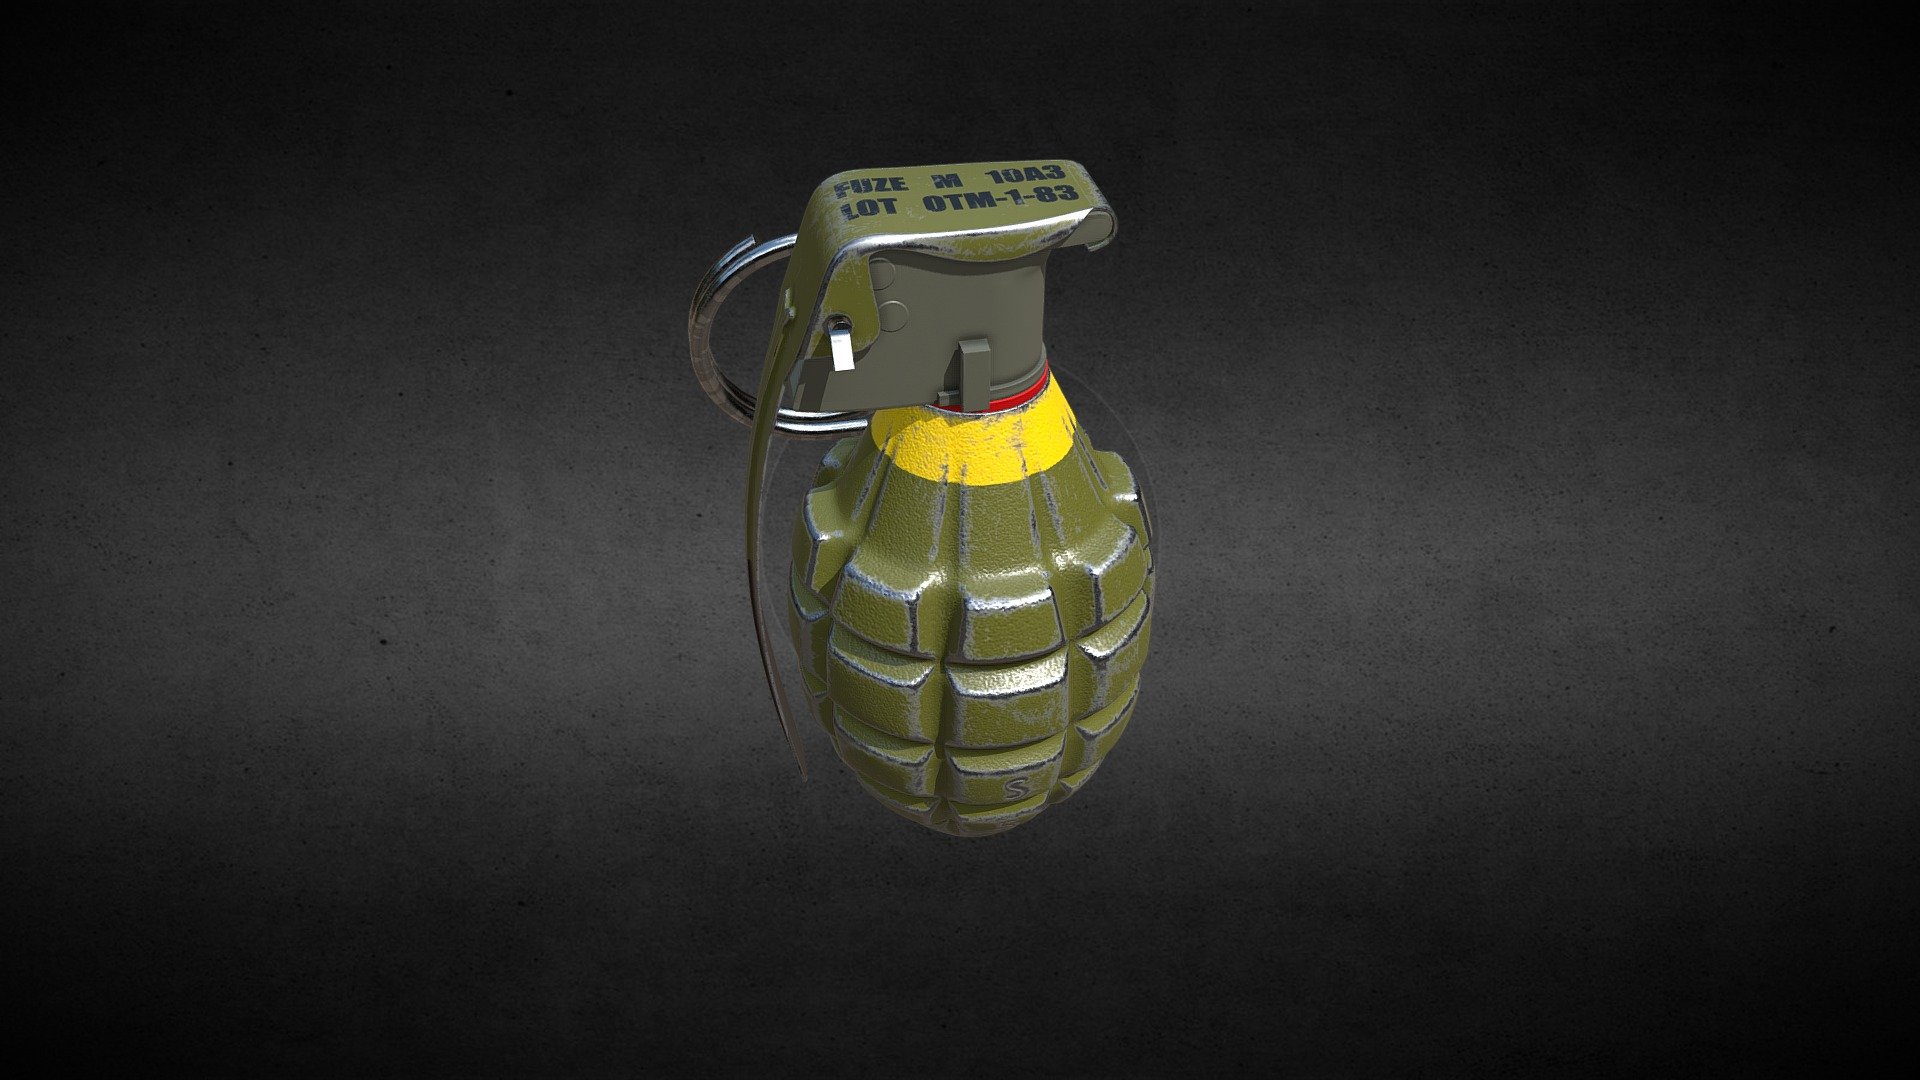 The Mk 2 Grenade